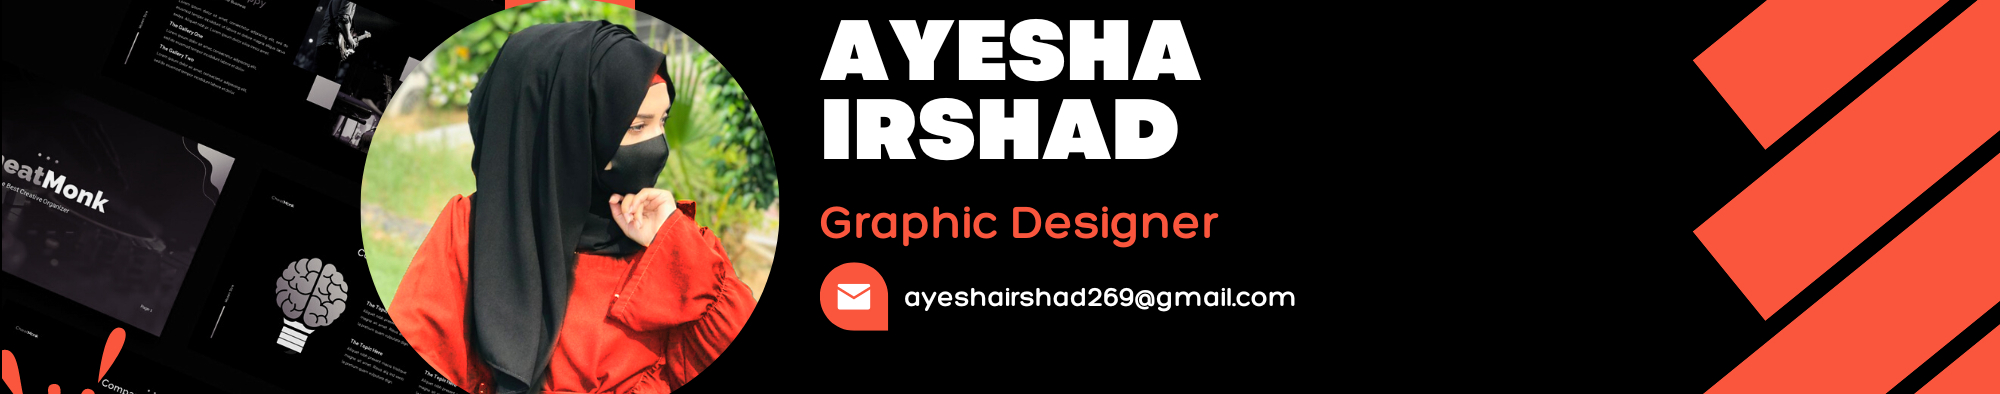 Ayesha Irshad's profile banner